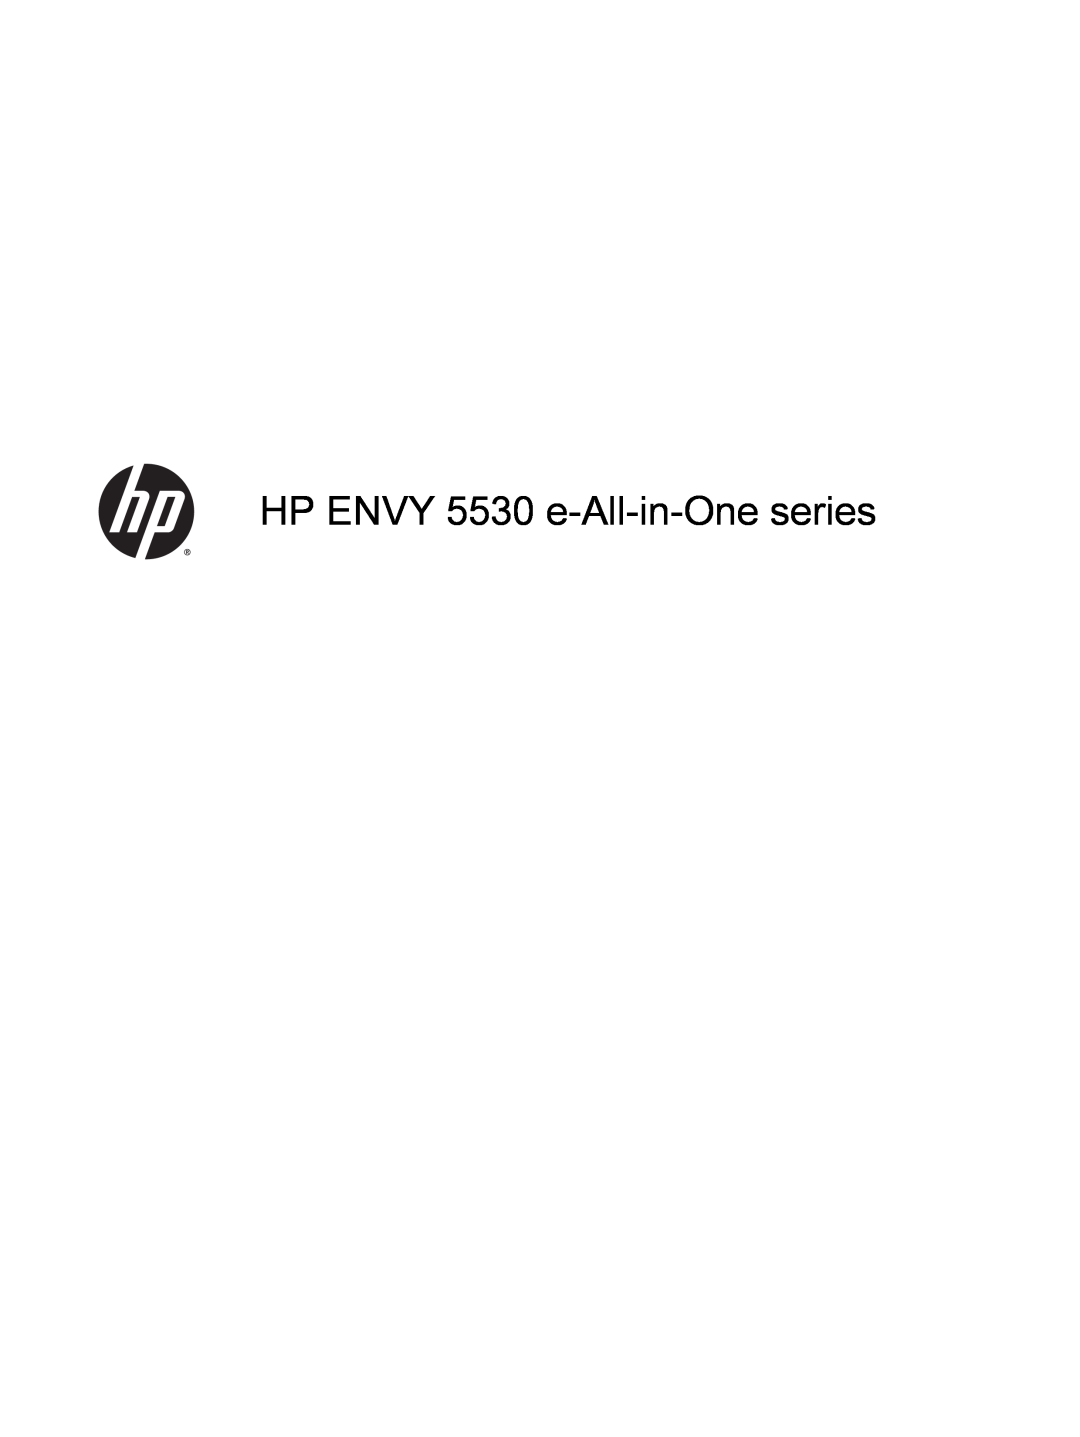 HP 5530 A9J40A#B1H, 5535 A9J44A1H3 manual HP ENVY 5530 e-All-in-One series 